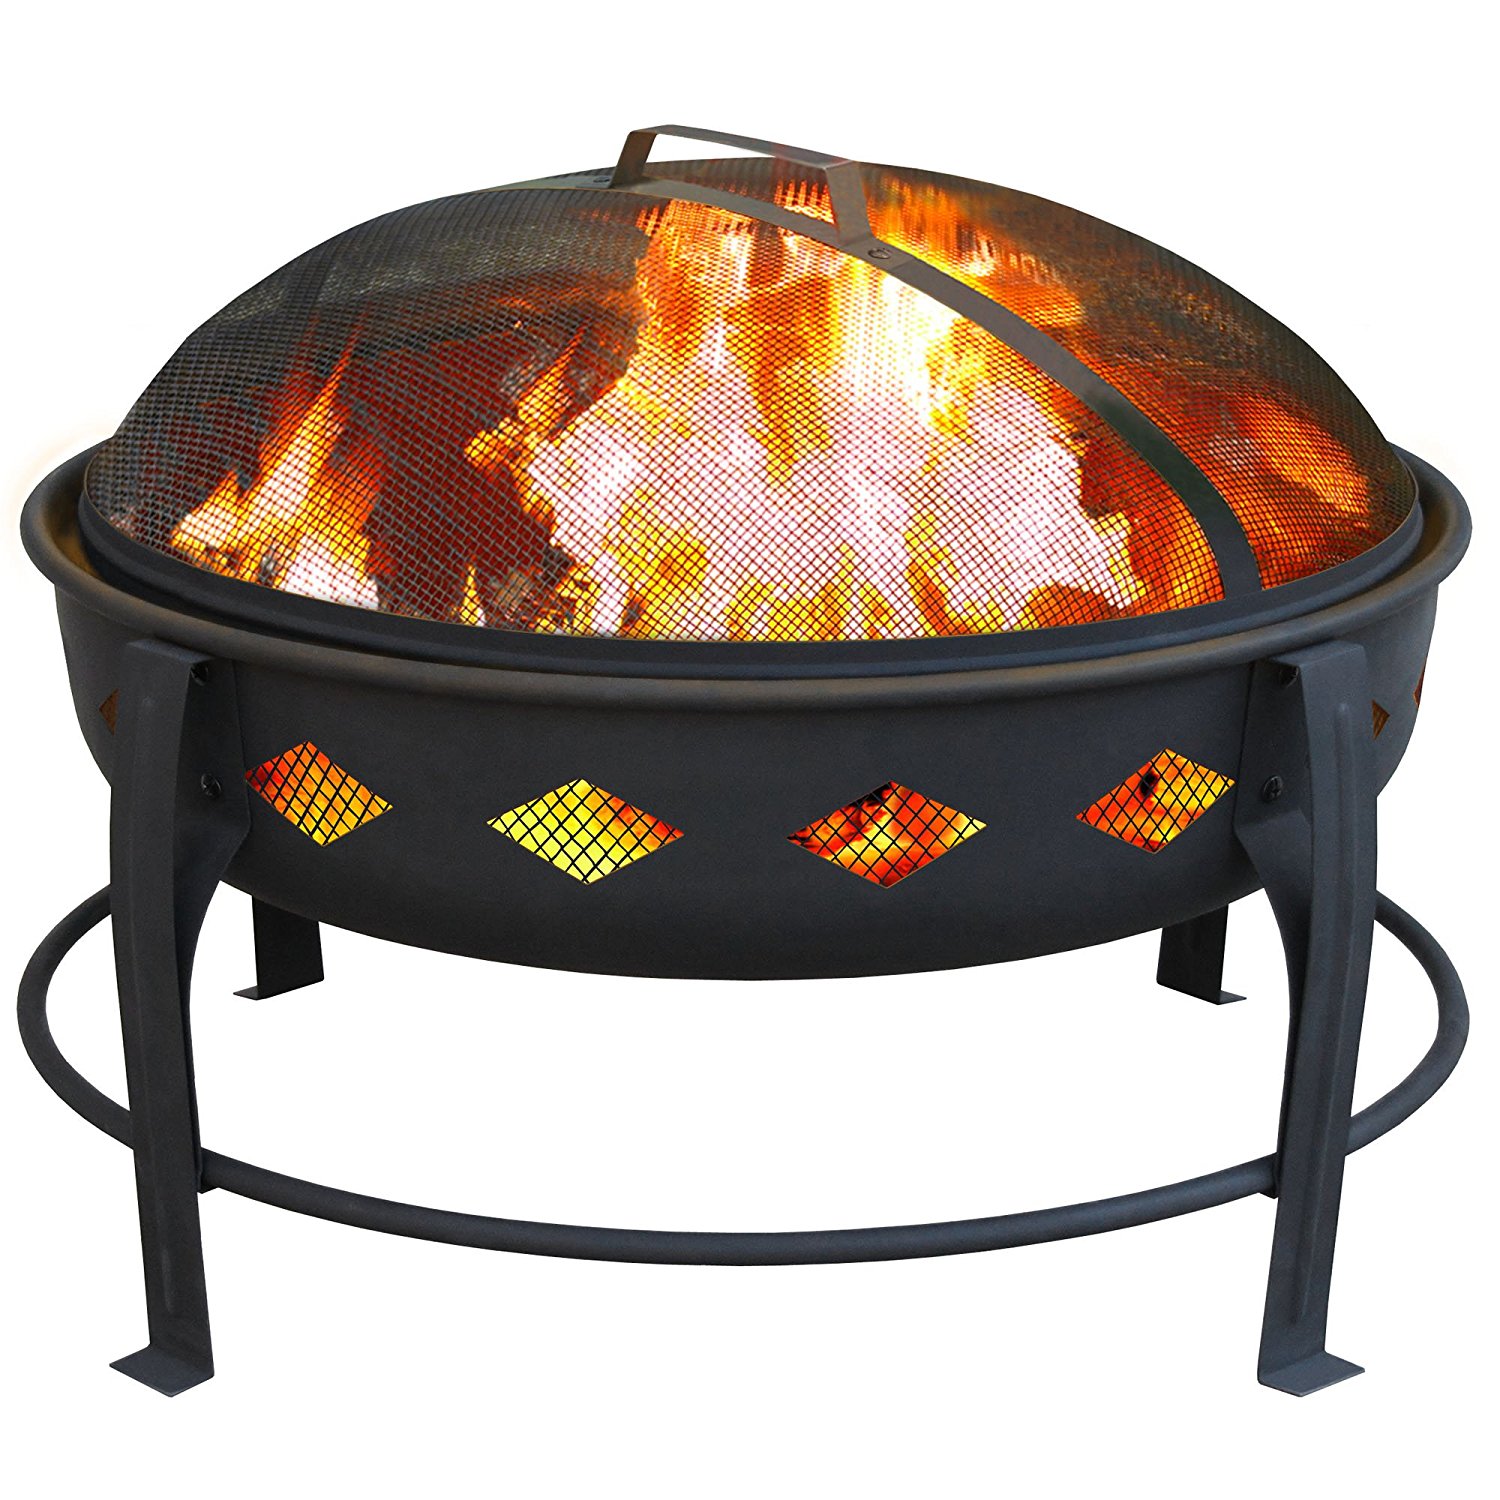 Amazon.com : Landmann USA Bromley Fire Pit, Black : Garden & Outdoor